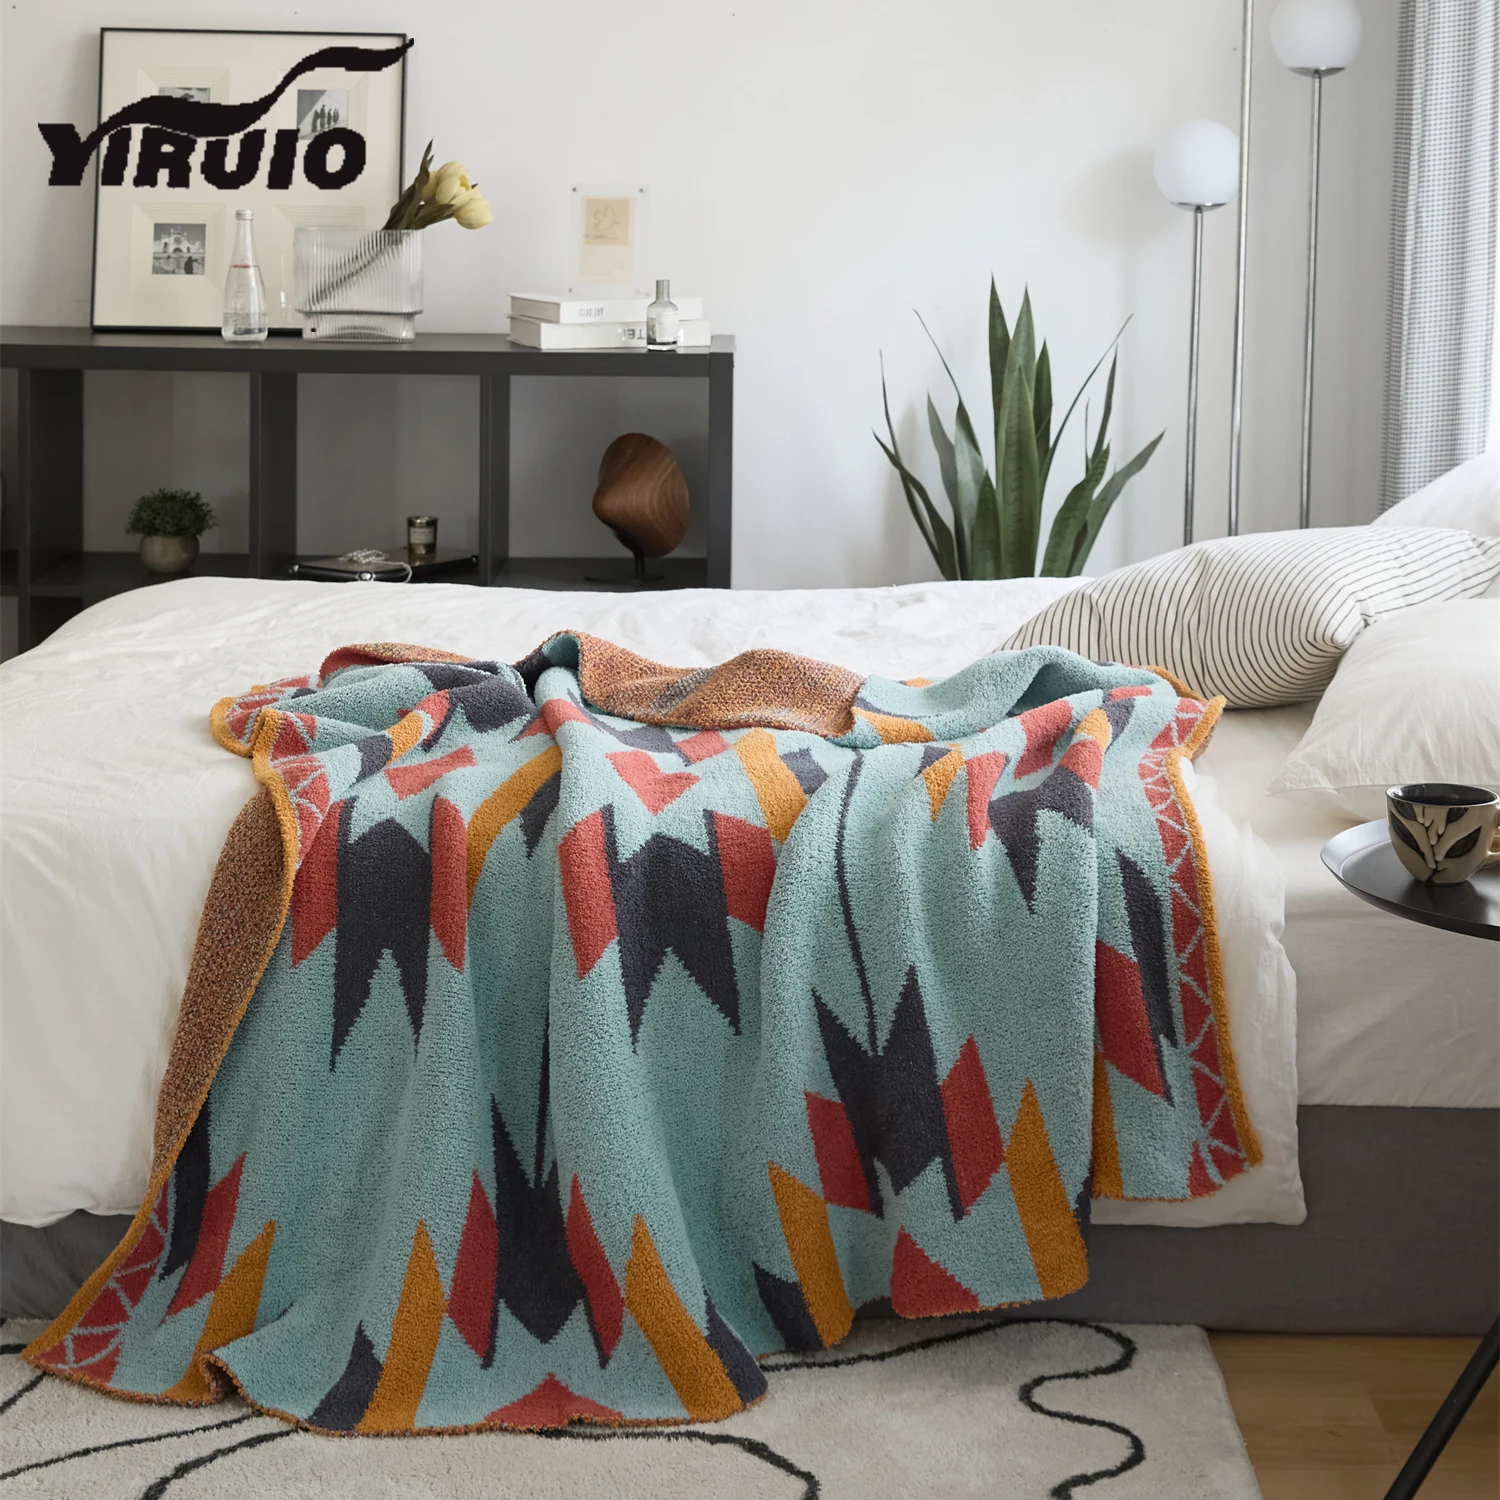 

YIRUIO Exotica Geometric Pattern Furry Blanket Bohemian Decorative Sofa Bed Lesiure TV Nap Blanket Throw Soft Cozy Knit Blankets